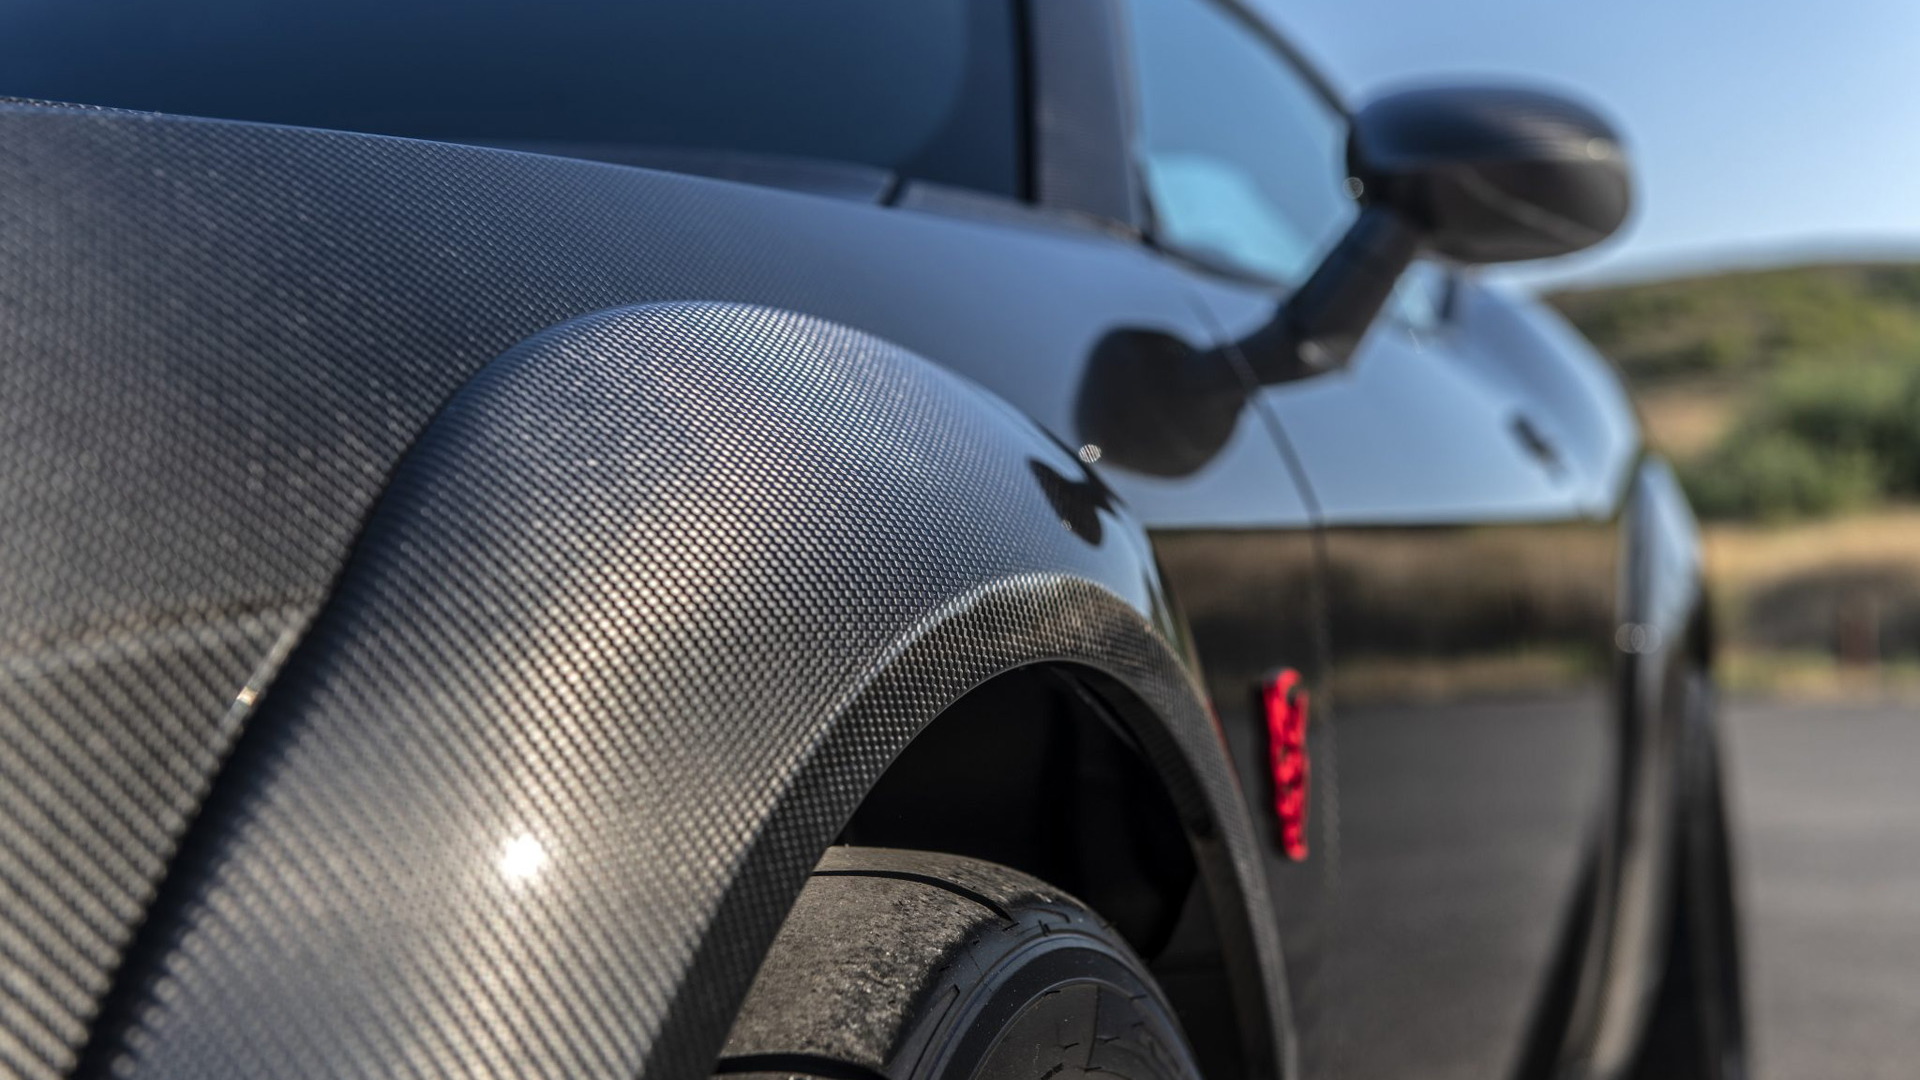 2018 Dodge Challenger SRT Demon with carbon-fiber body by SpeedKore - Photo credit: Bring a Trailer